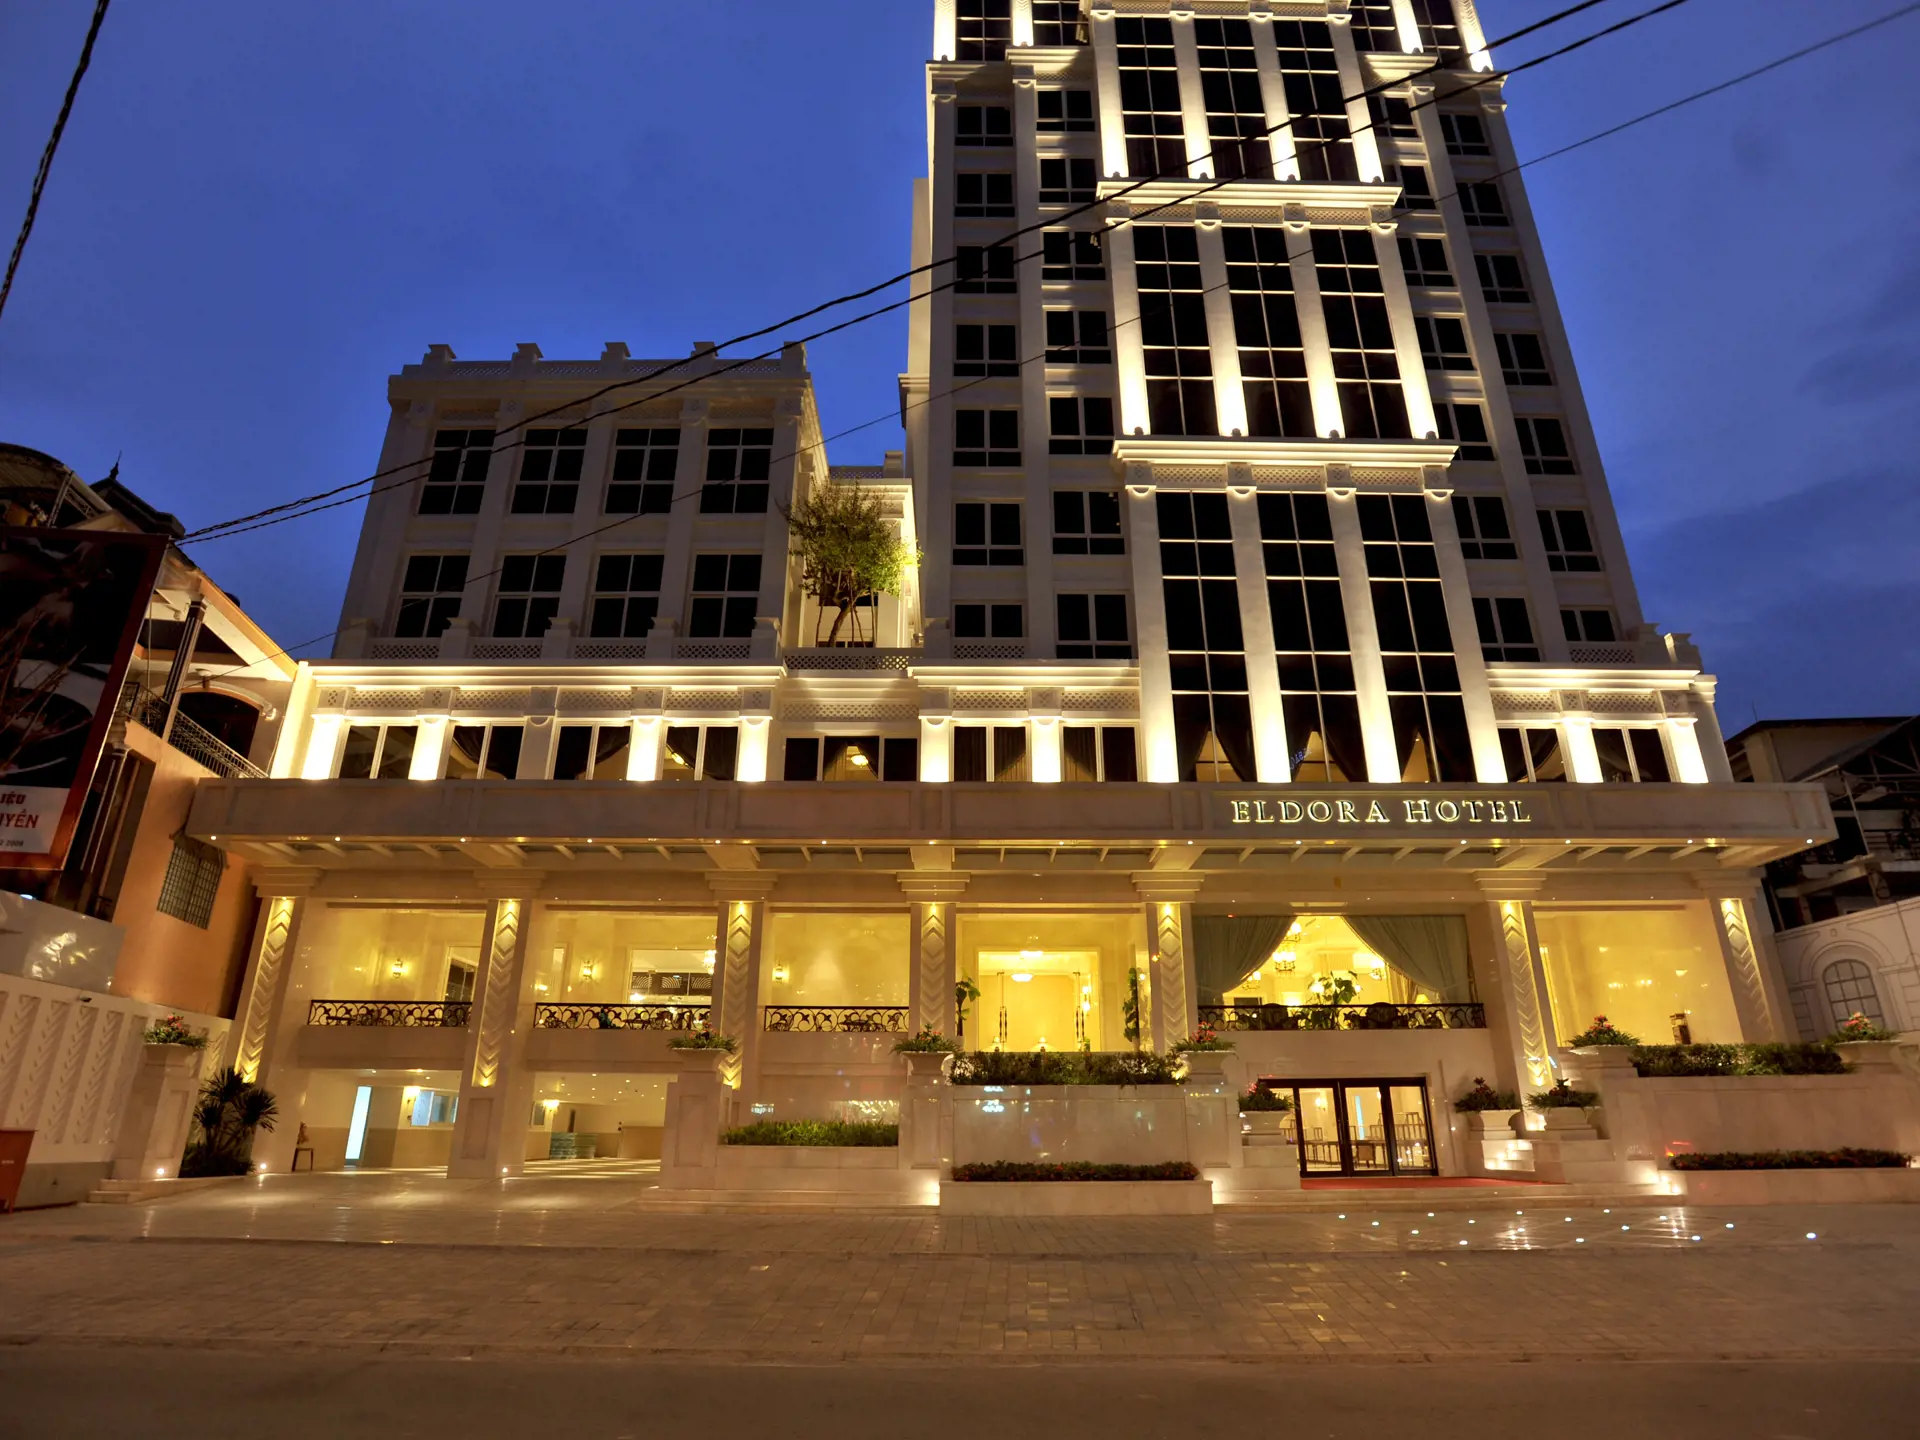 Eldora Hotel - Overview 1.jpg